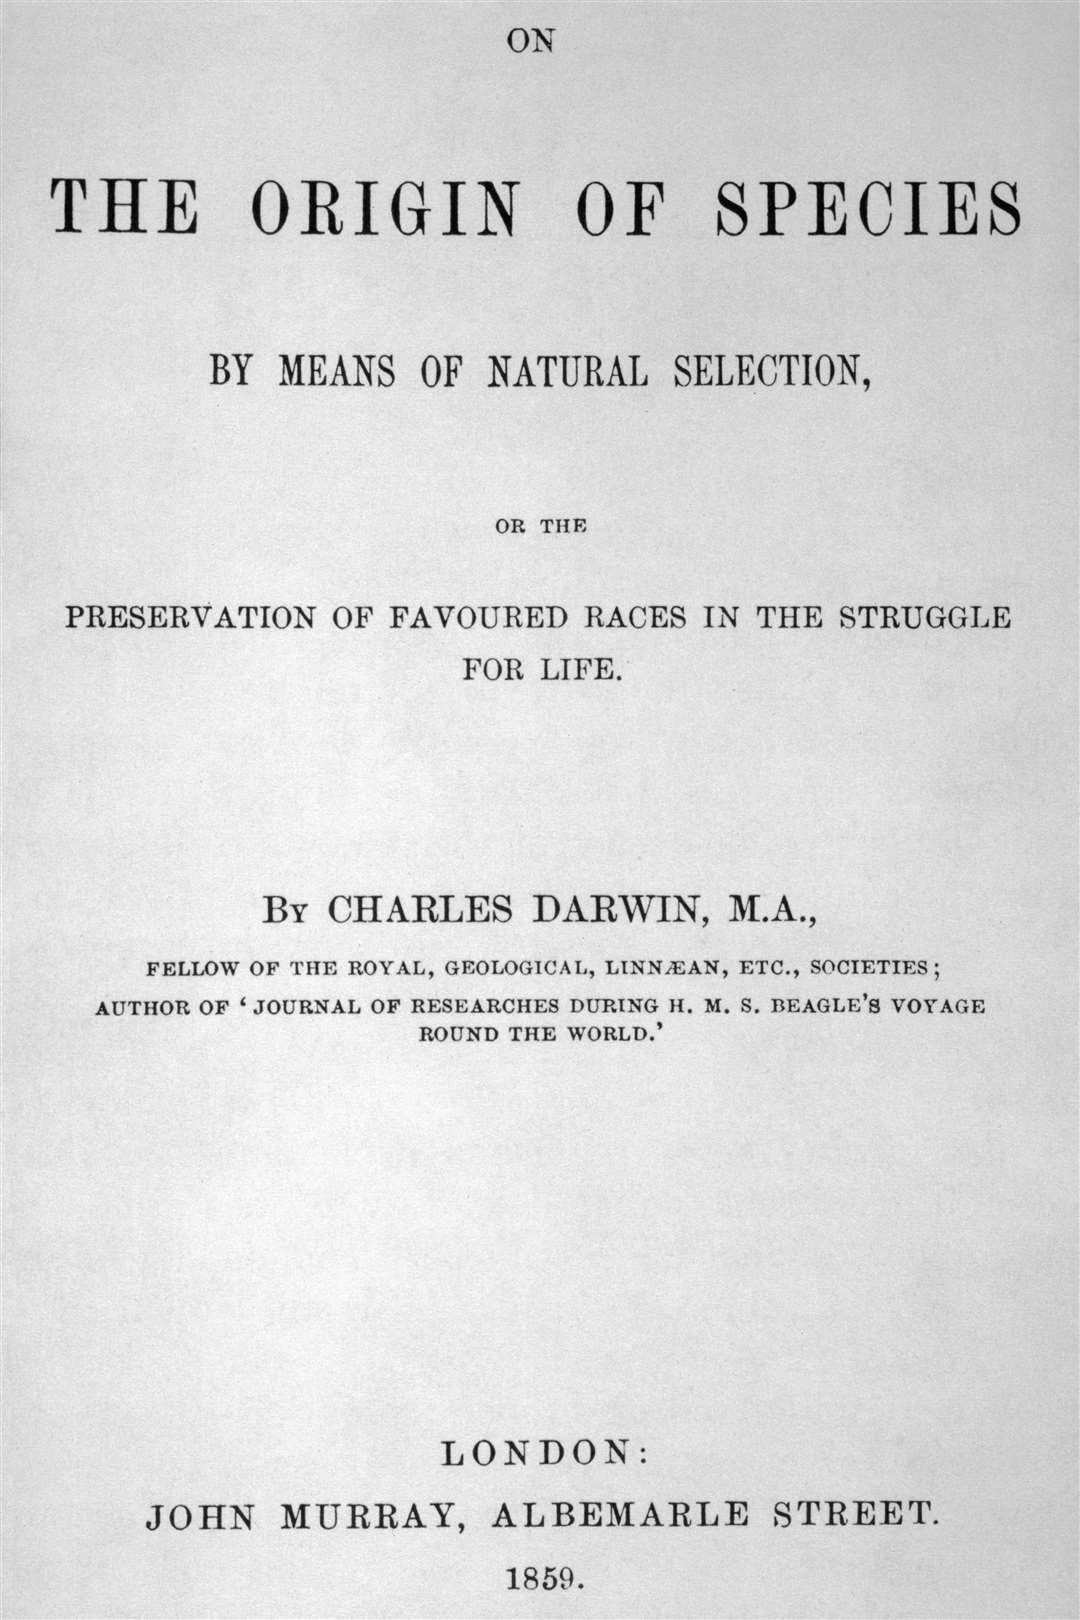 On the Origin of Species by Charles Darwin.